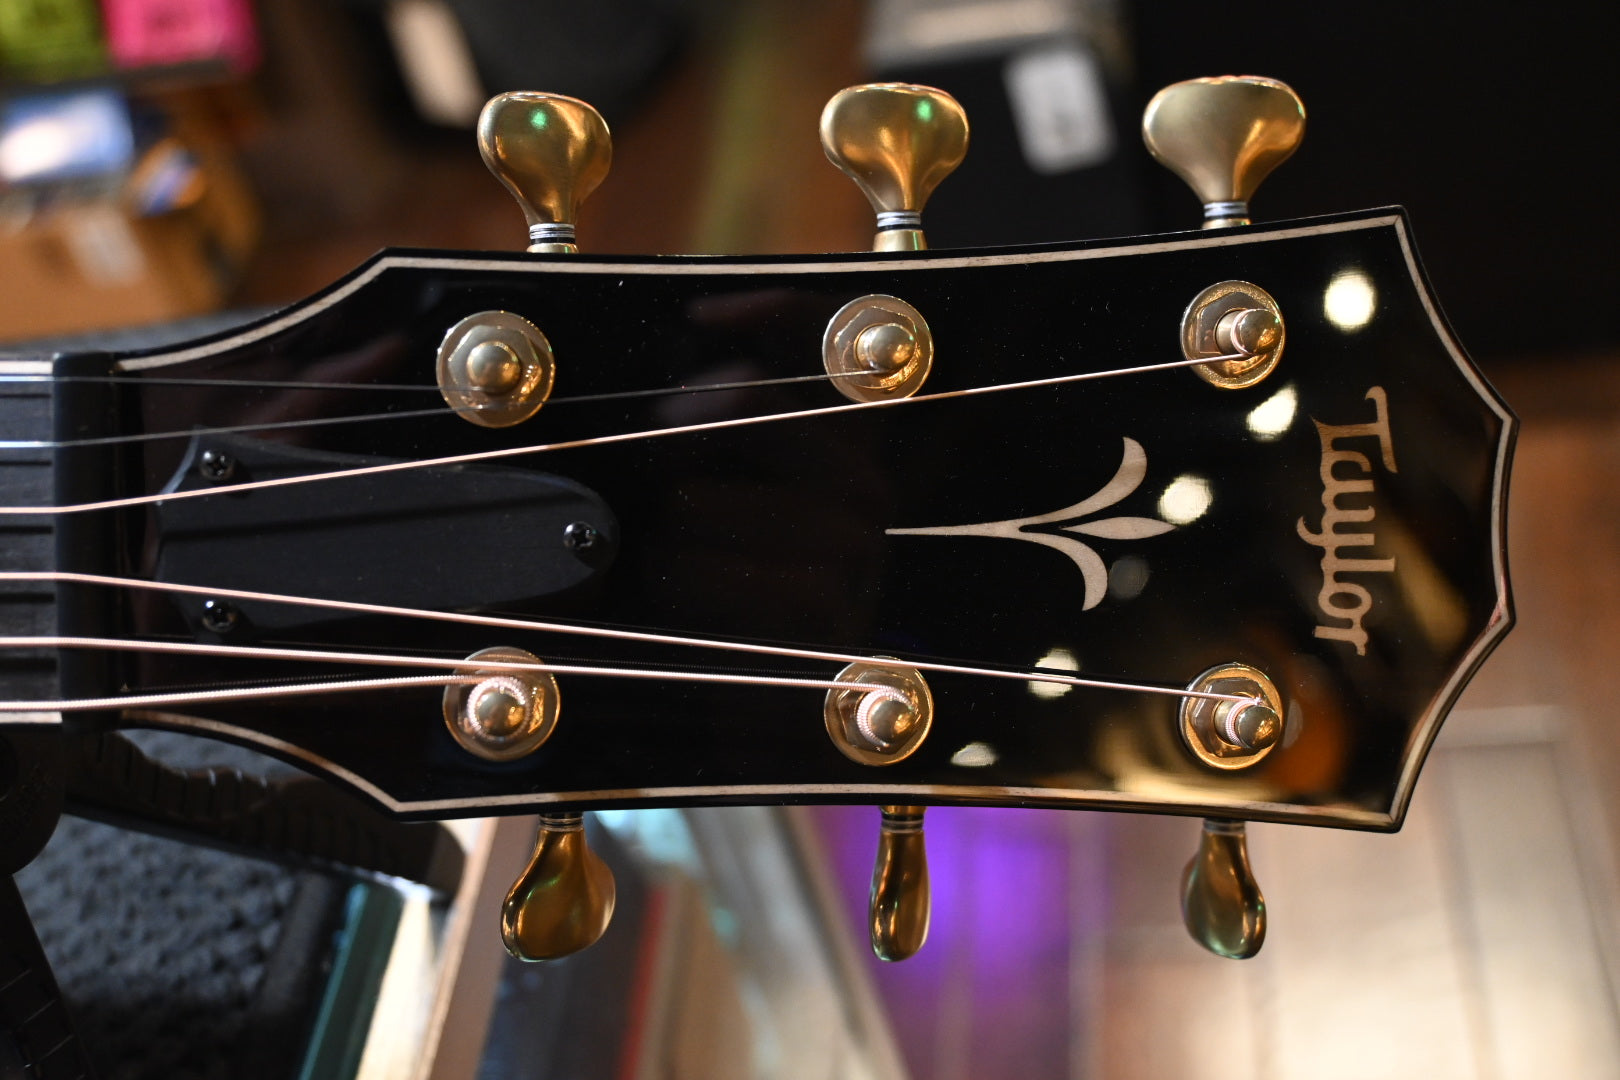 Taylor K24ce Left-Handed - Shaded Edge Burst Guitar #2162 w/a buy a GS Mini Koa for $299 Promo! - Danville Music